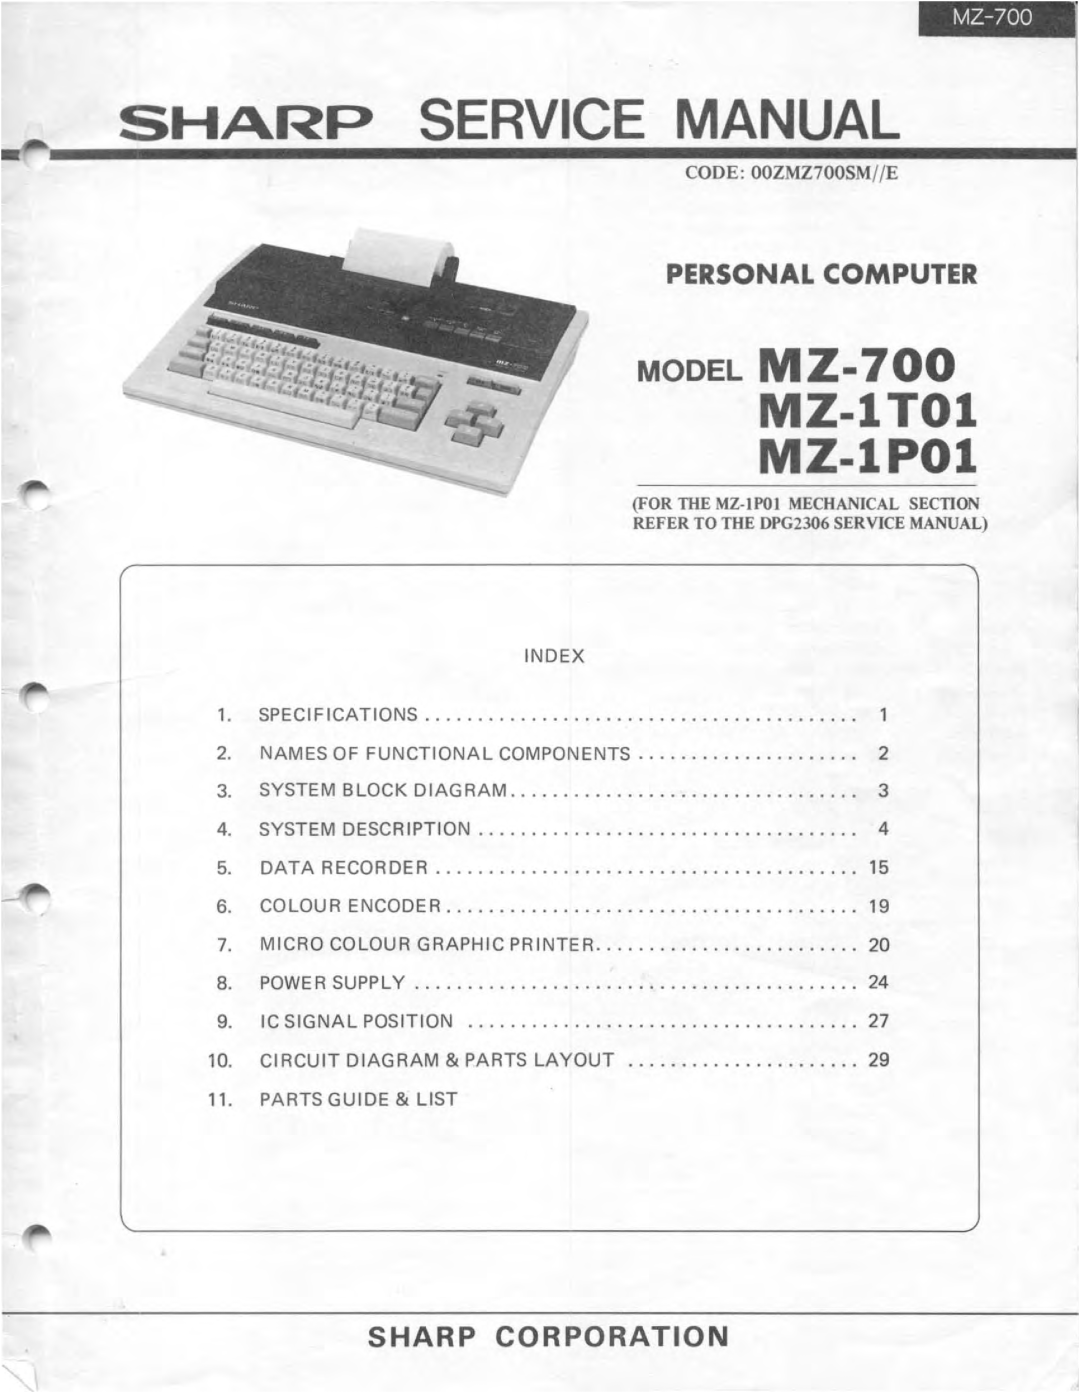 Sharp manual Personal Computer, Sharp Service Manual, MZ-1TOl MZ-1POl, MODEL MZ-700, Sharp Corporation 